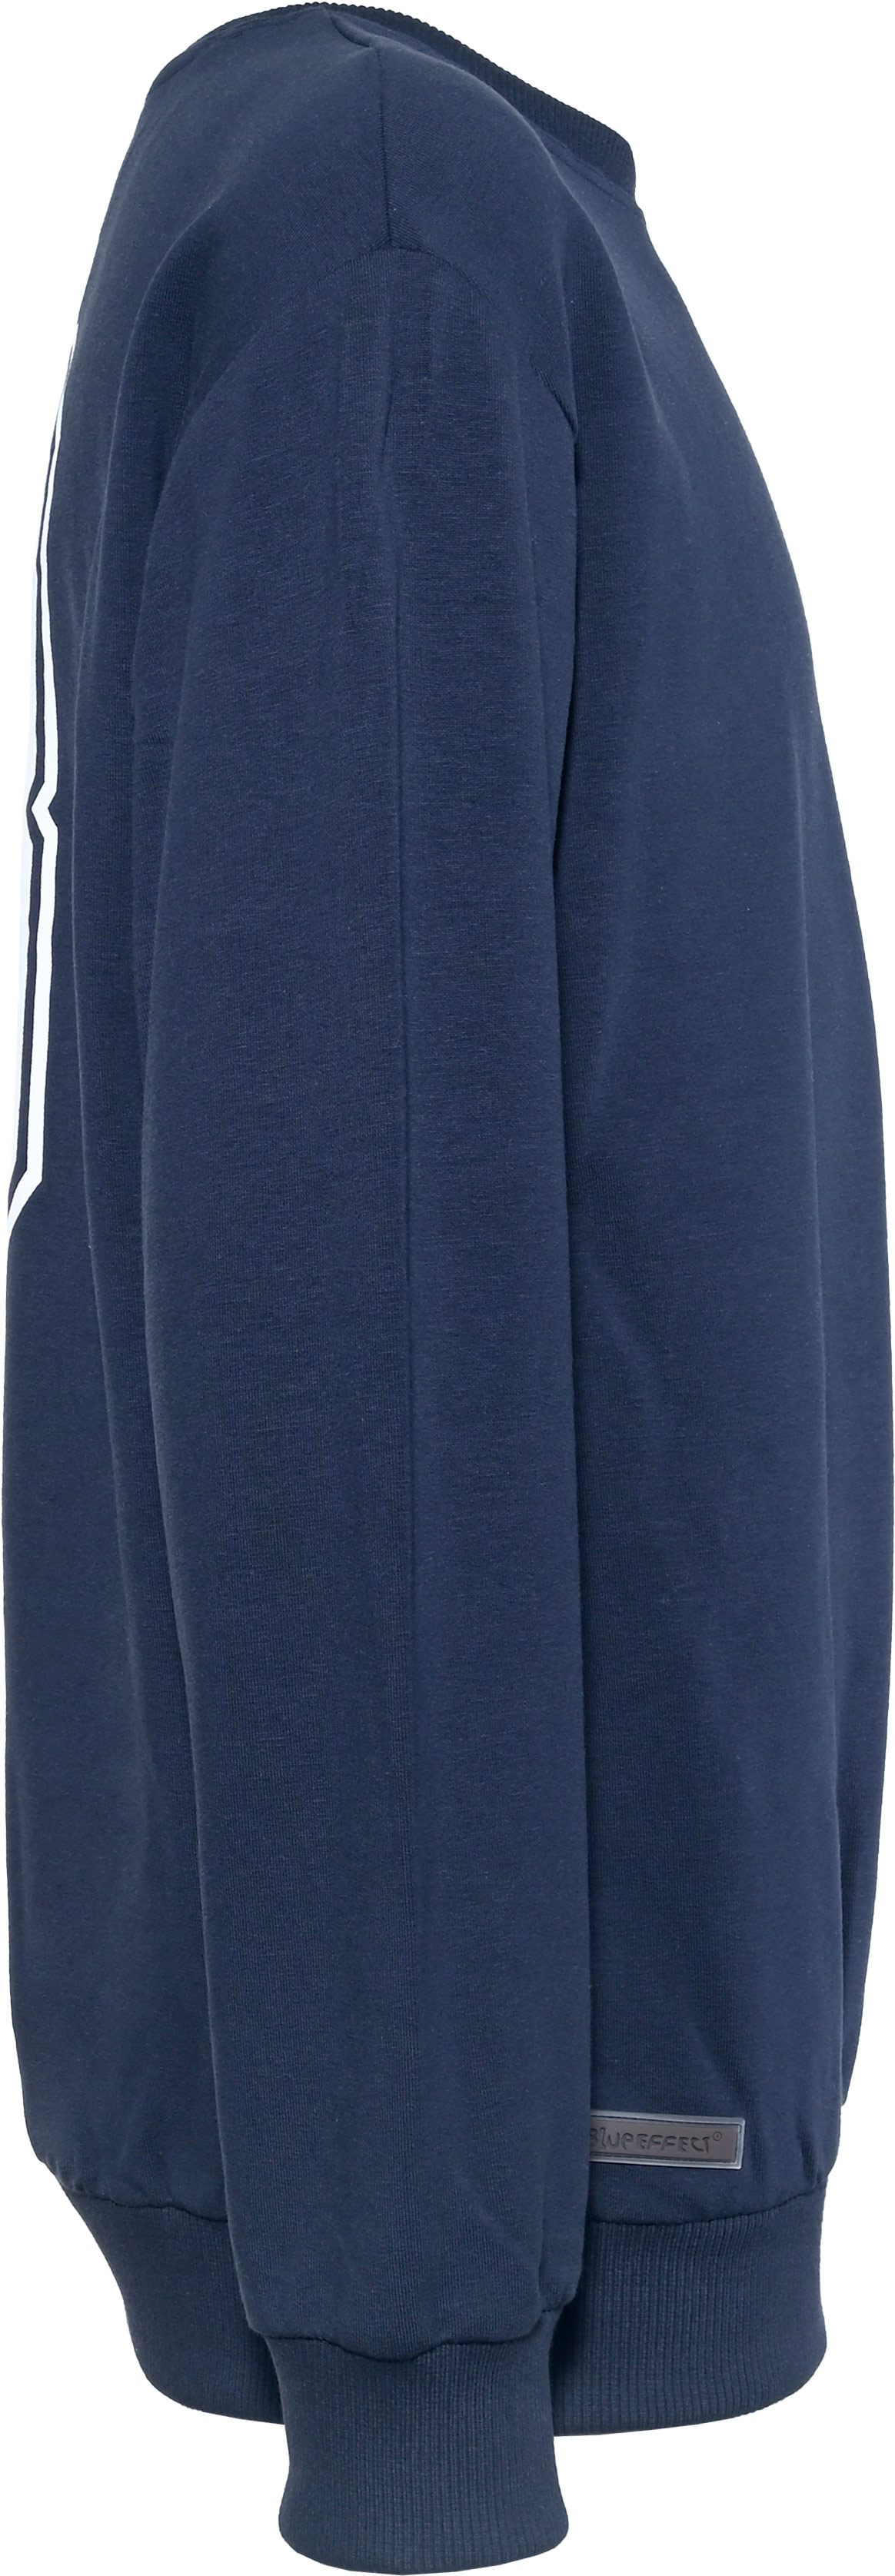 6296-JRNY Boys Sweatshirt -B, Oversized